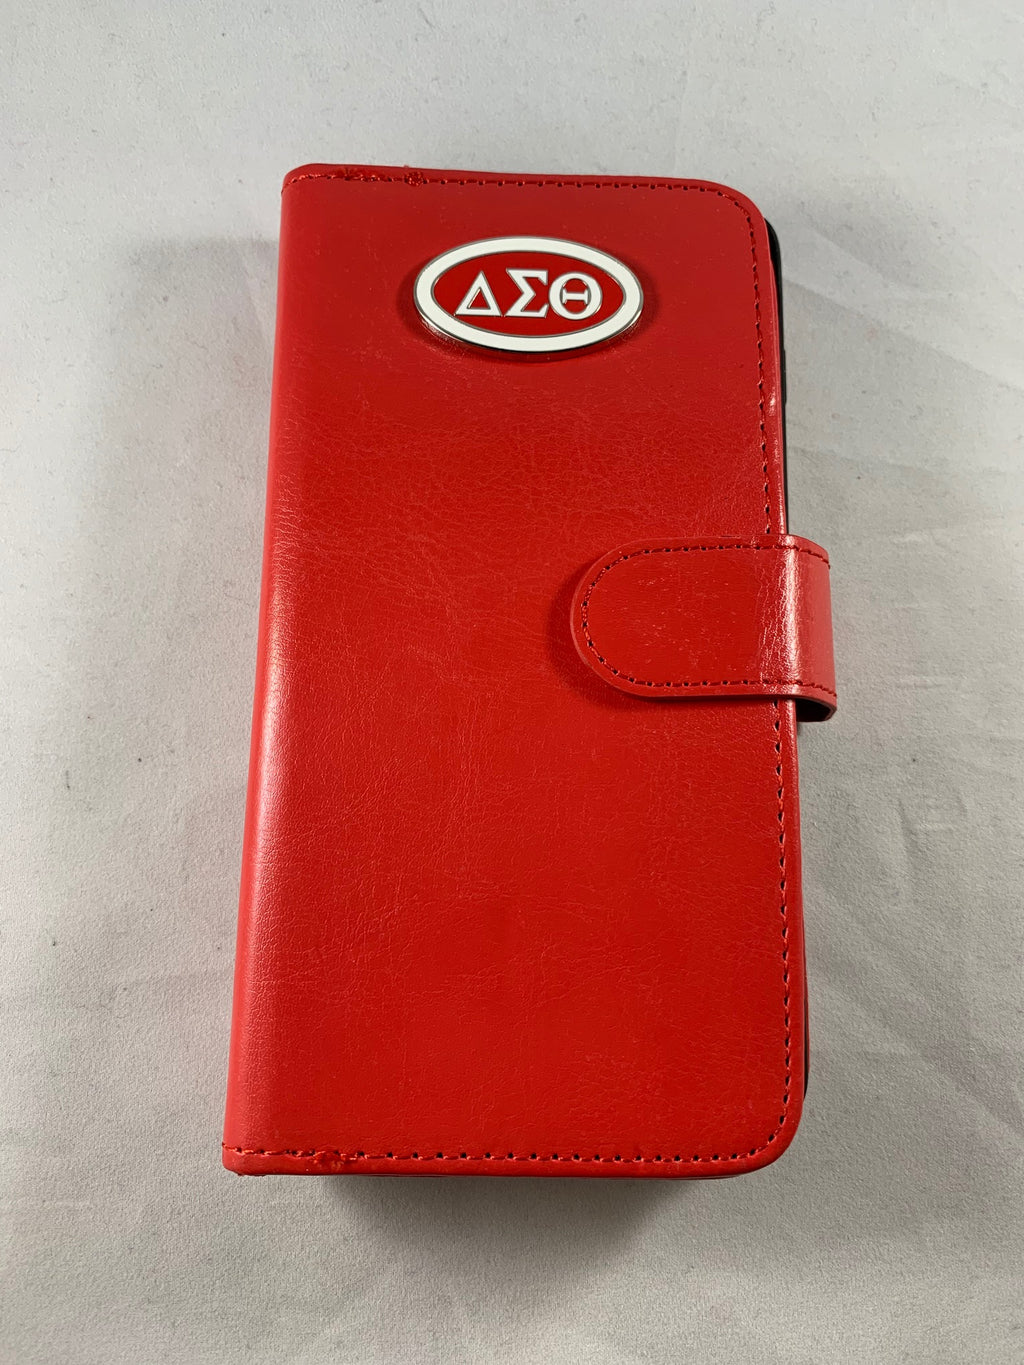 Delta S10 Plus Wallet Phone Cover